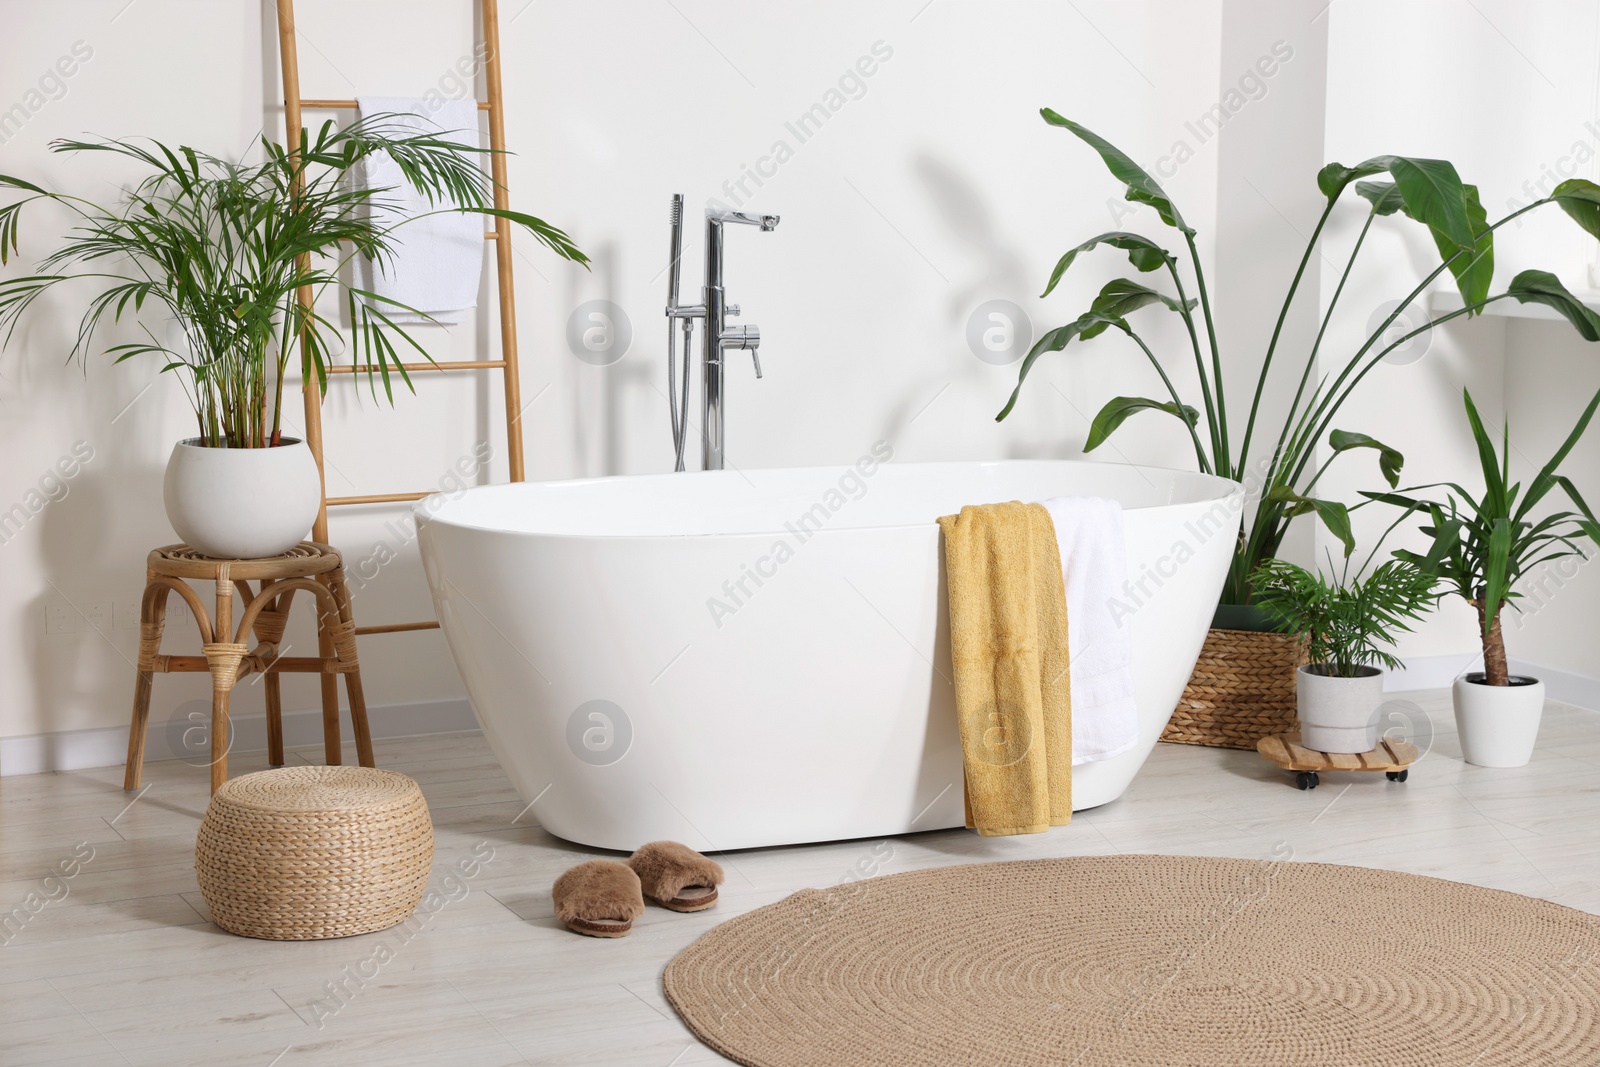 Photo of Stylish bathroom interior with modern ceramic tub and beautiful houseplants